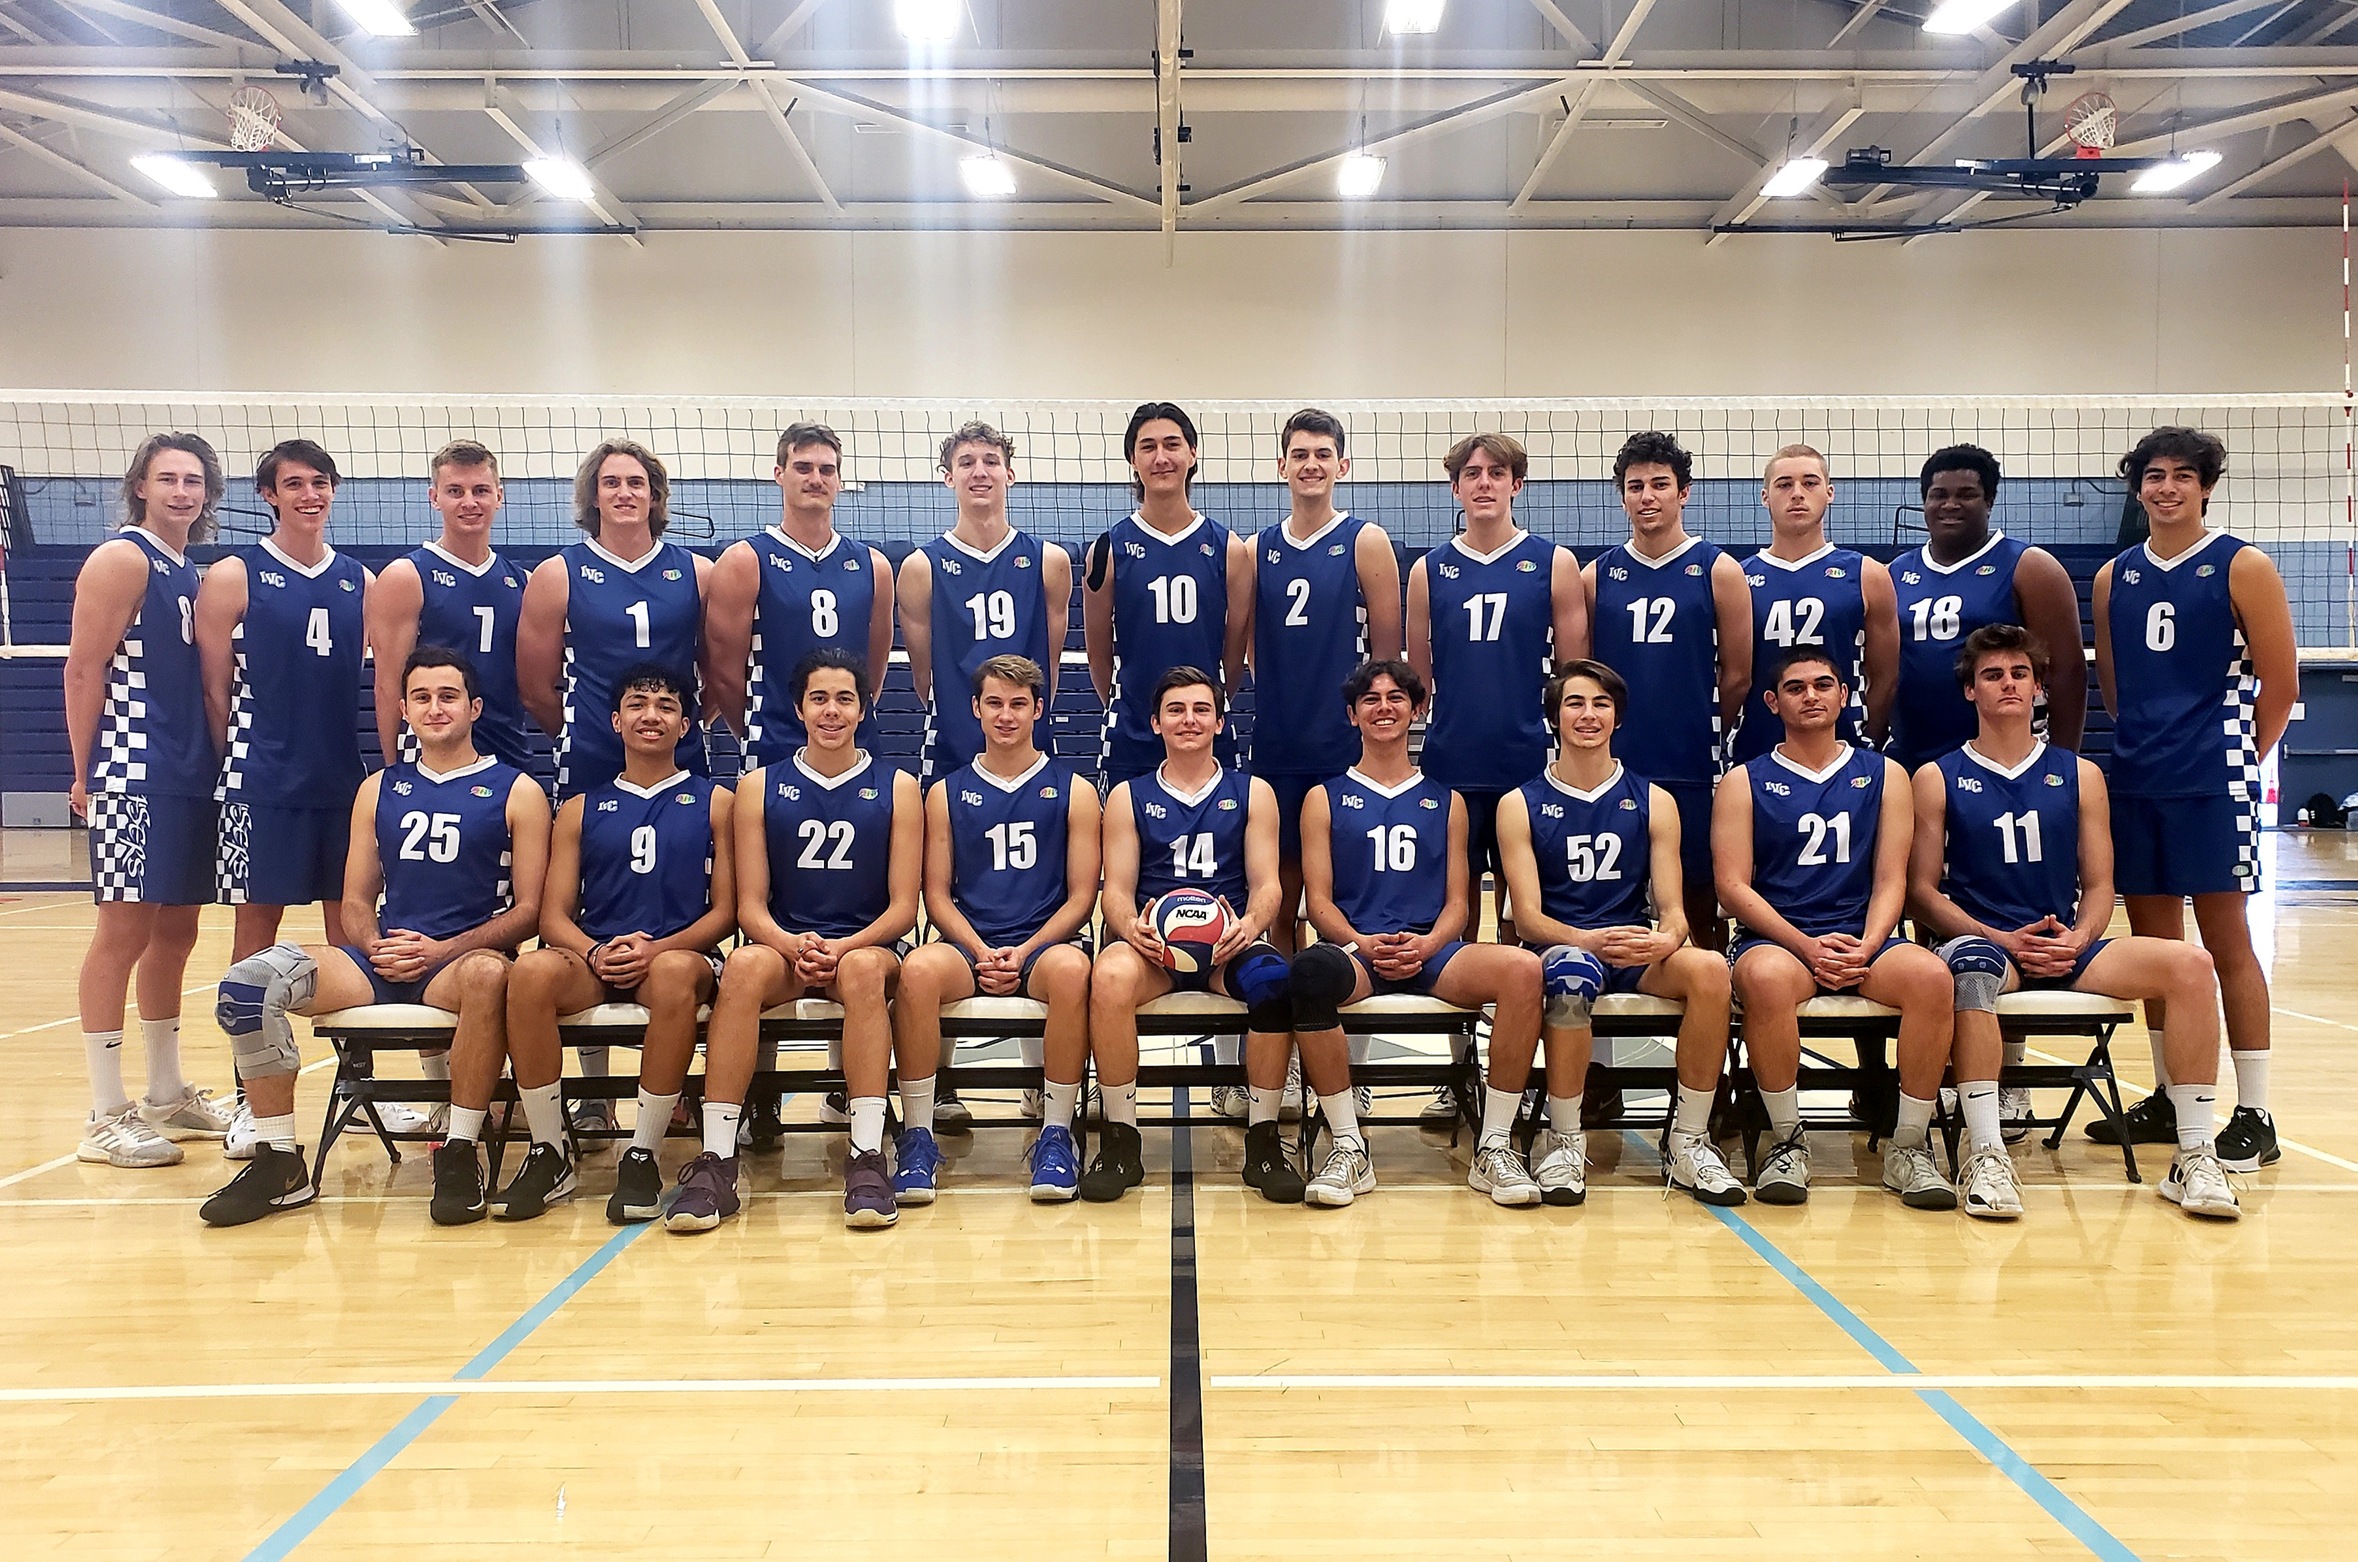 Men's volleyball team has impressive start to 2022 season